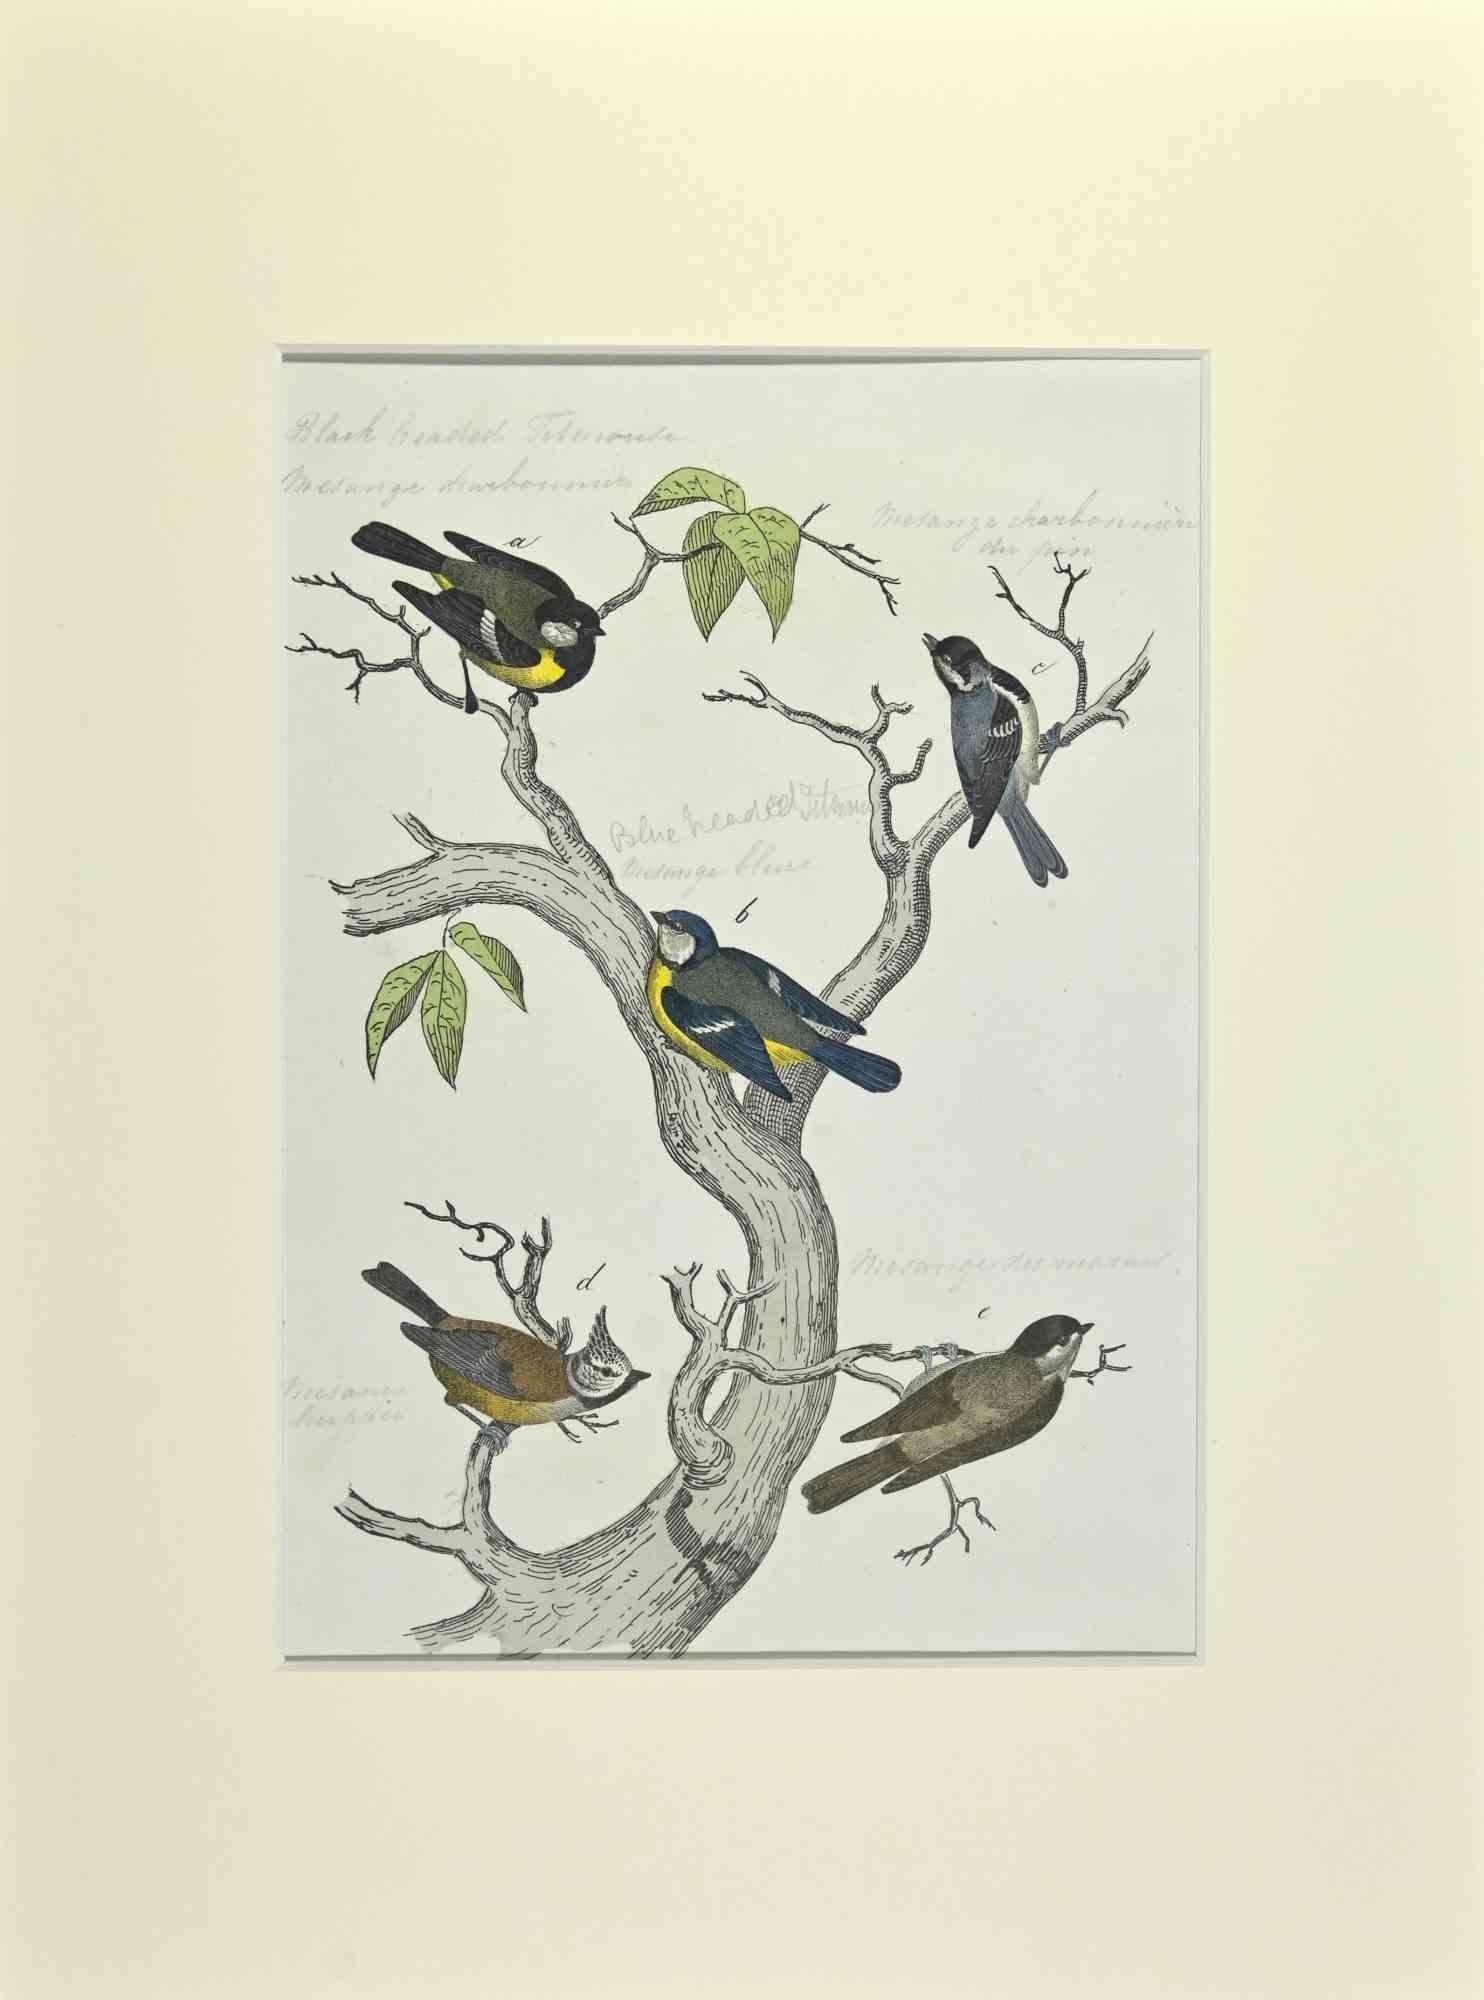 Blue, Black and Brown Birds - Etching by Johann Friedrich Naumann - 1840